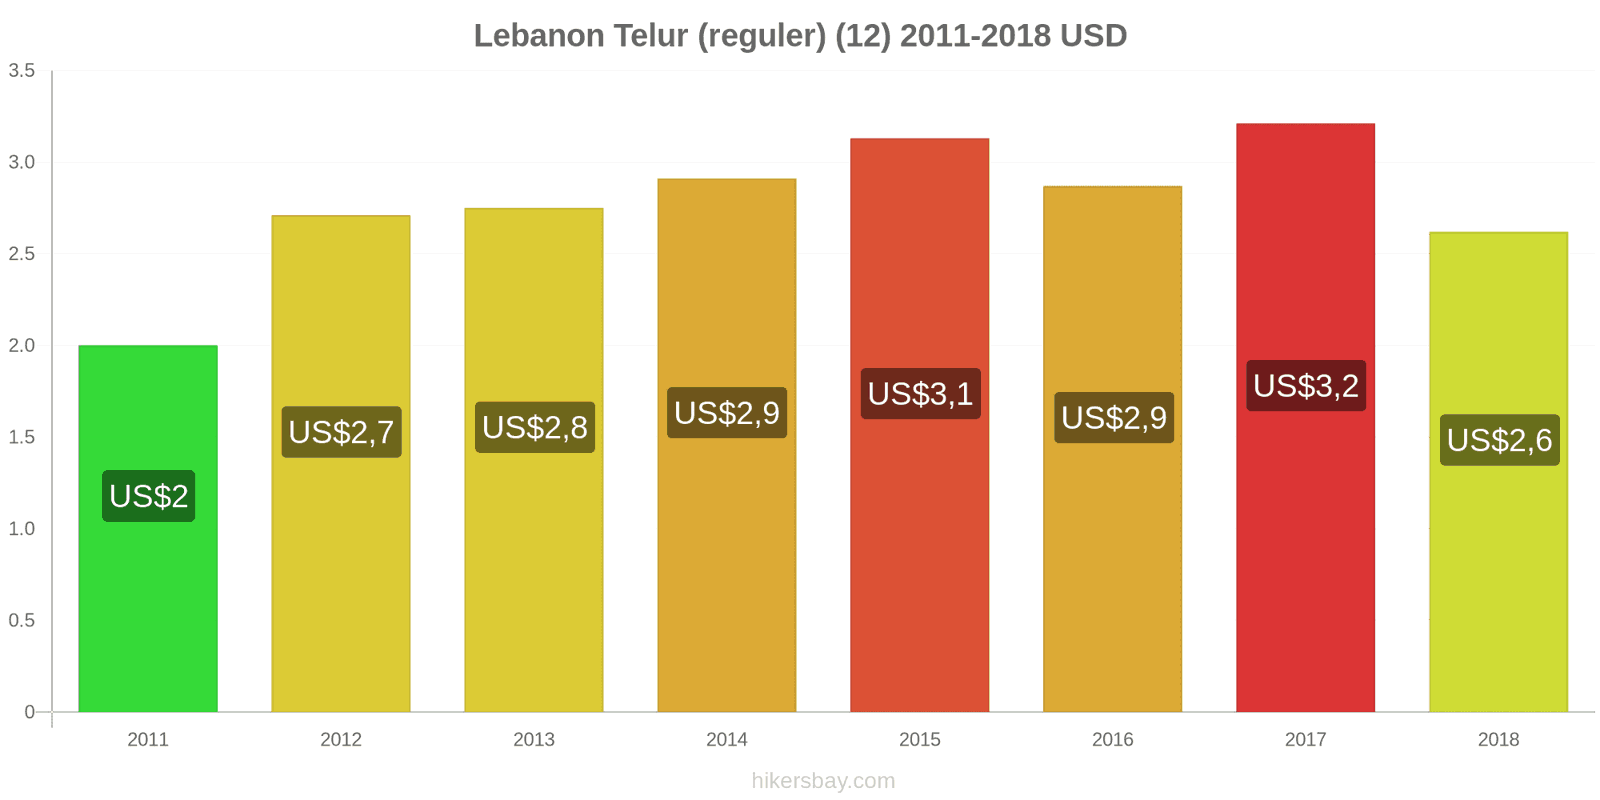 Lebanon perubahan harga Telur (biasa) (12) hikersbay.com